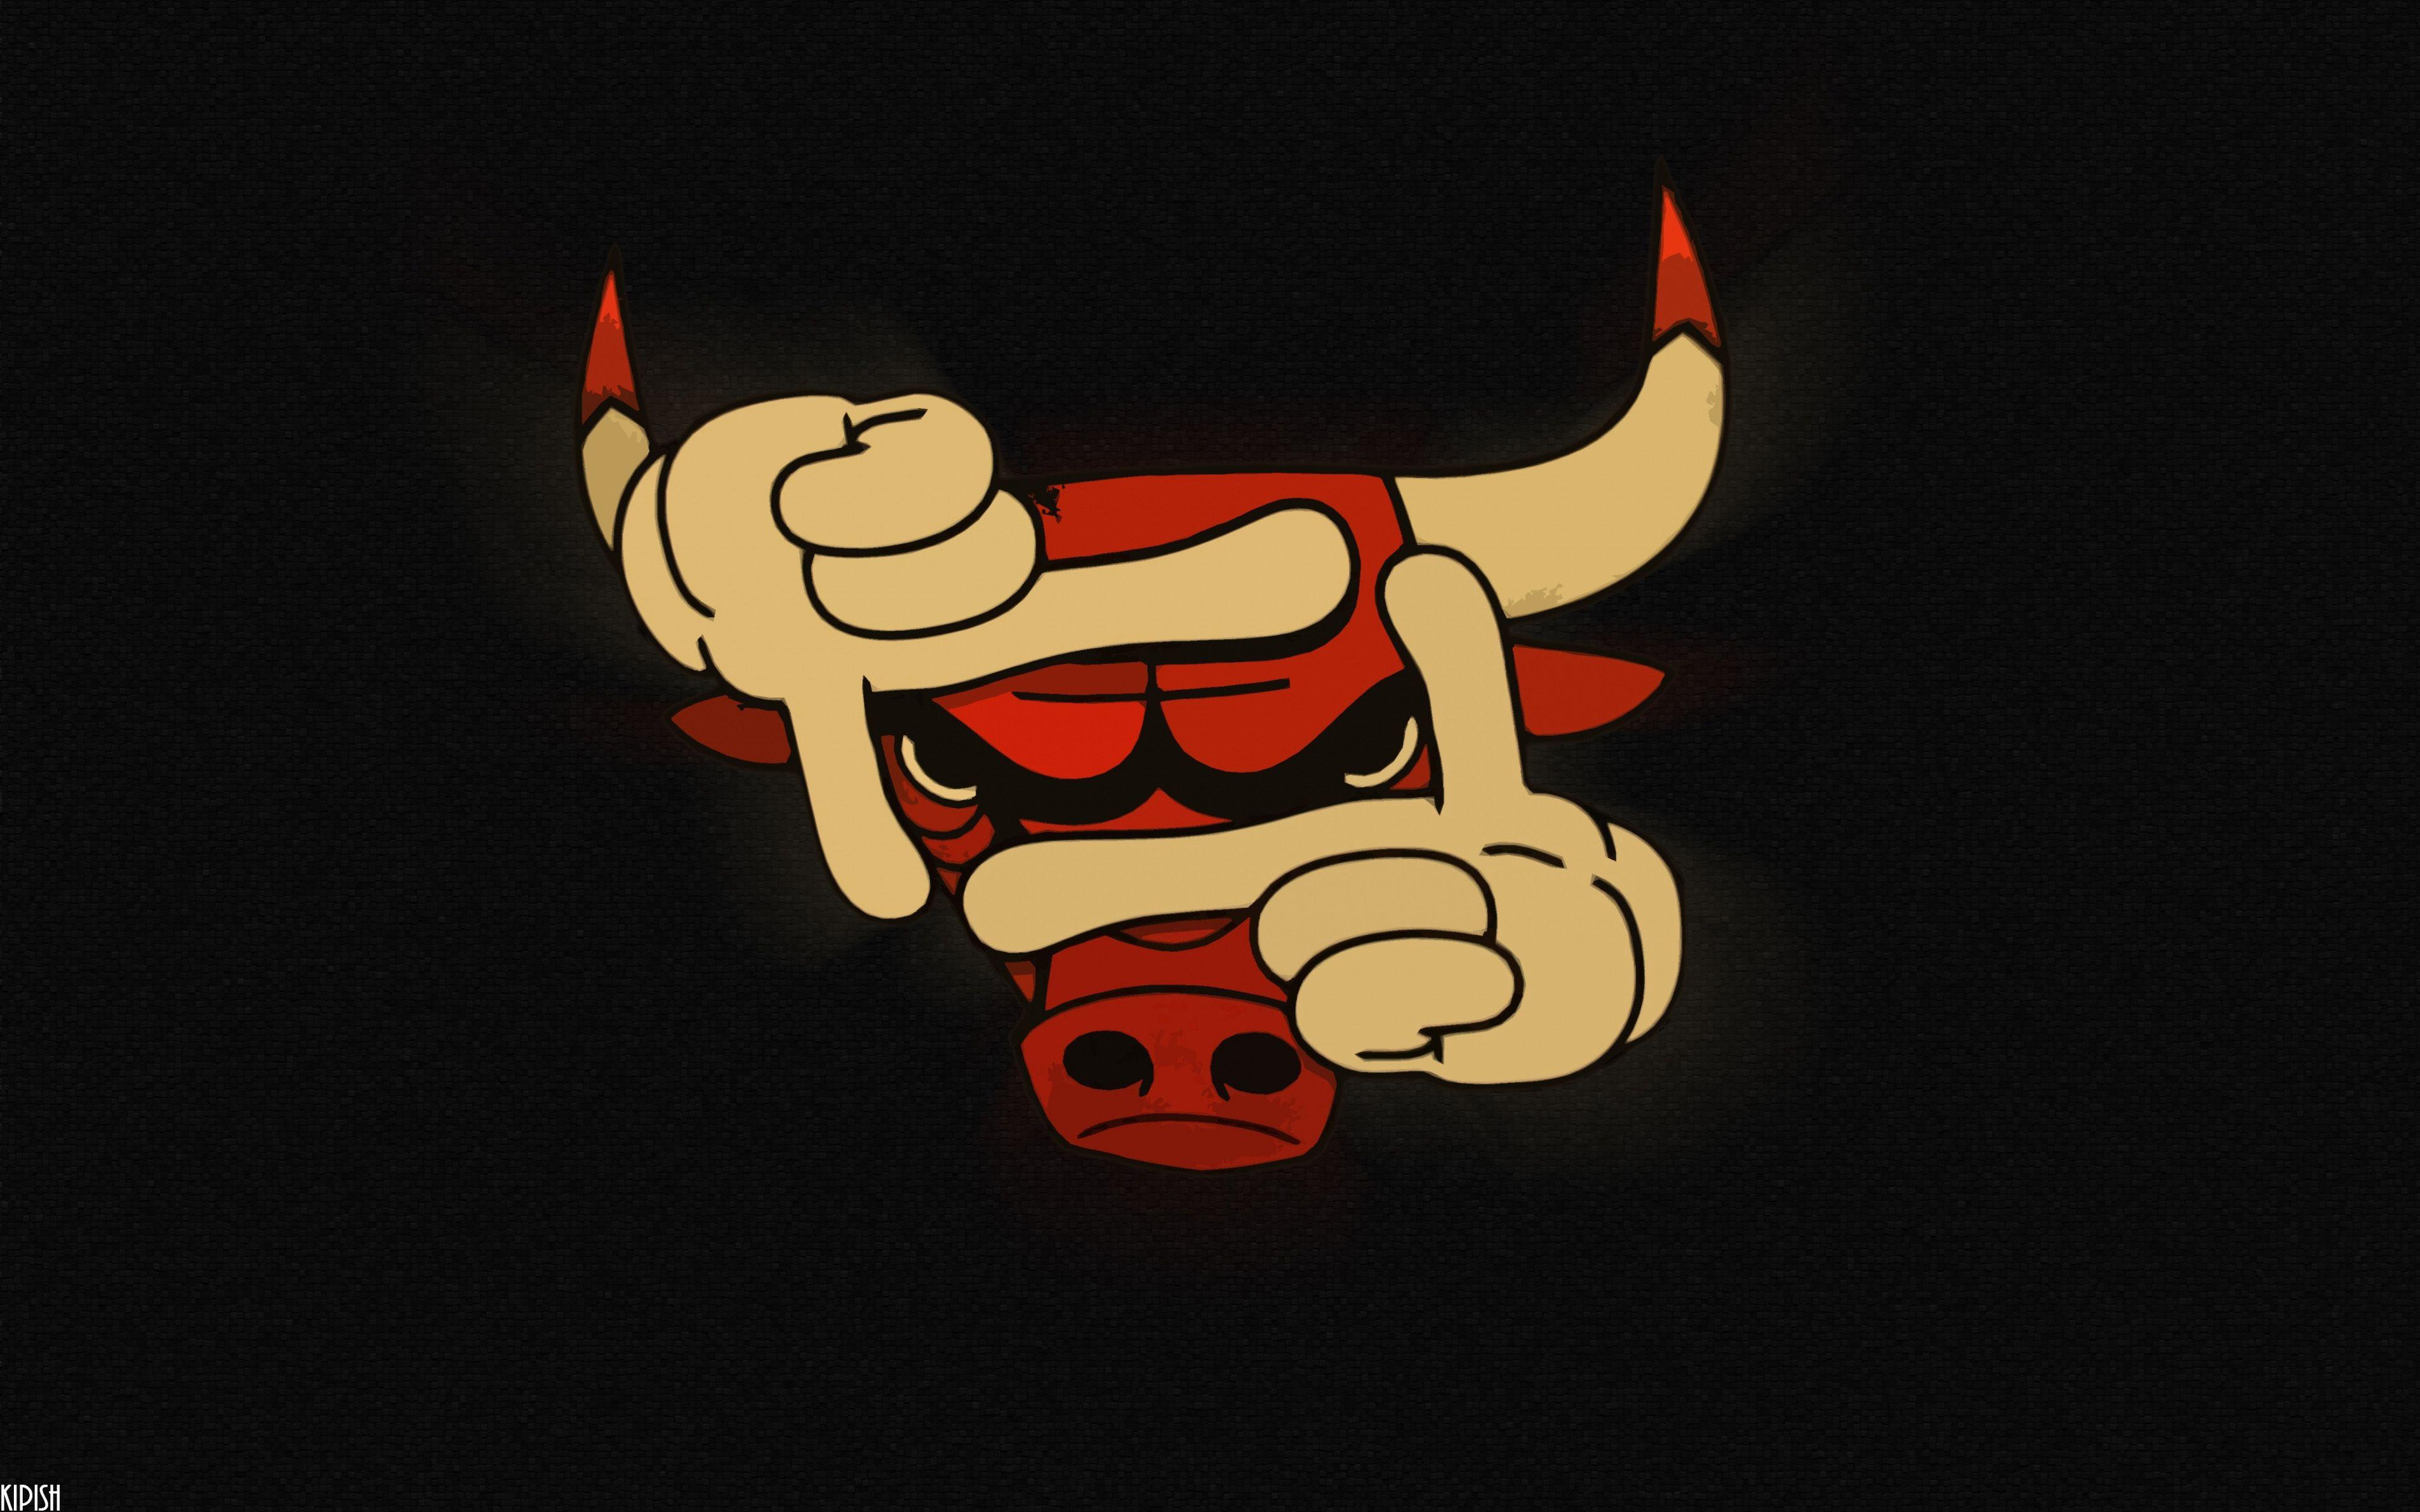 Chicago Bulls NBA Basketball Team Logo Wallpaper